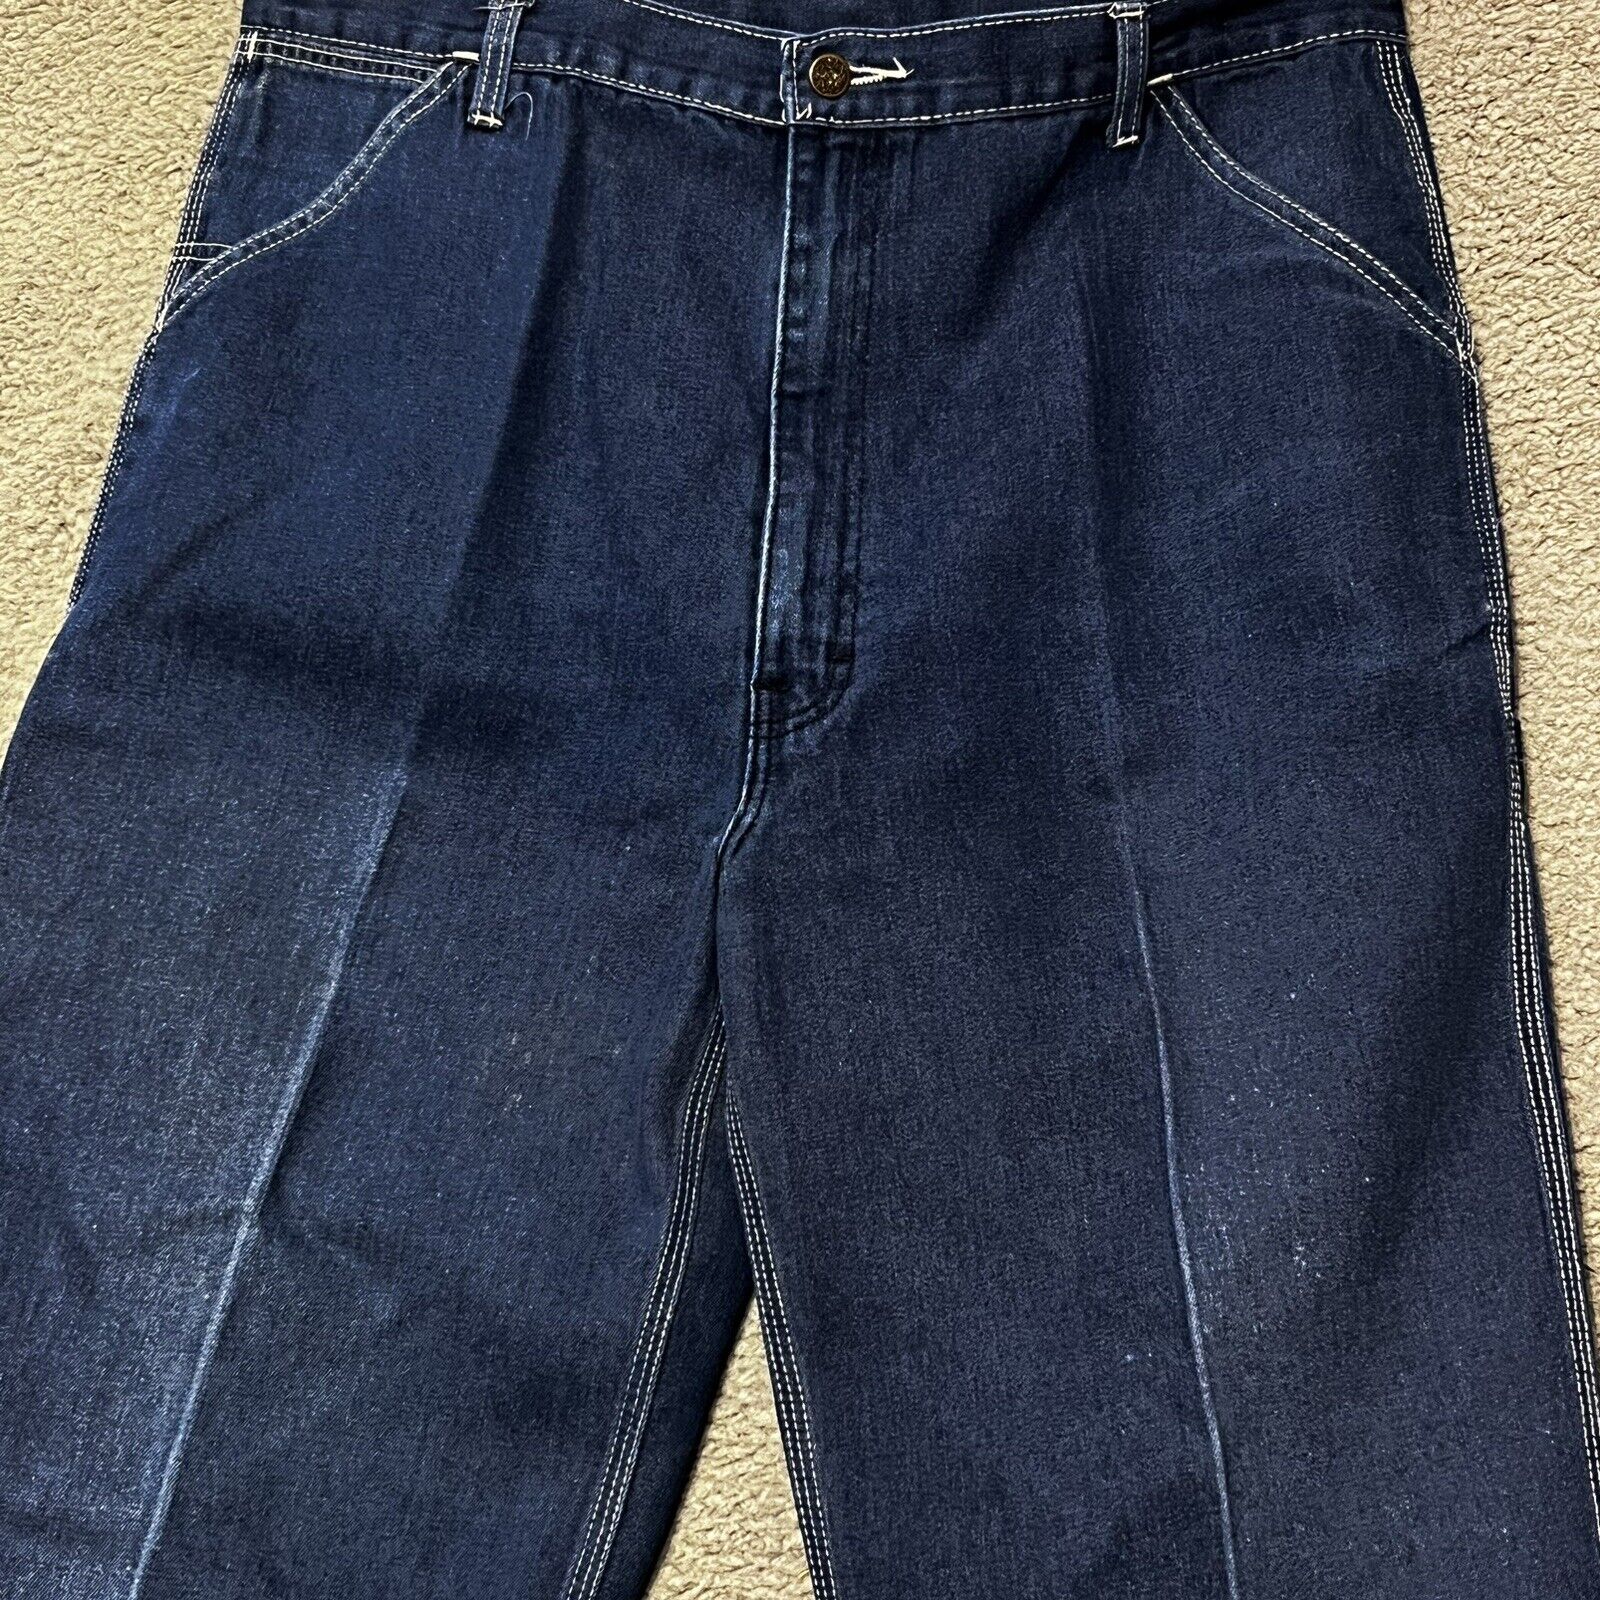 Roebucks Carpenter Jeans Mens 36x31 Blue Denim Sears Vintage 70s Made in USA